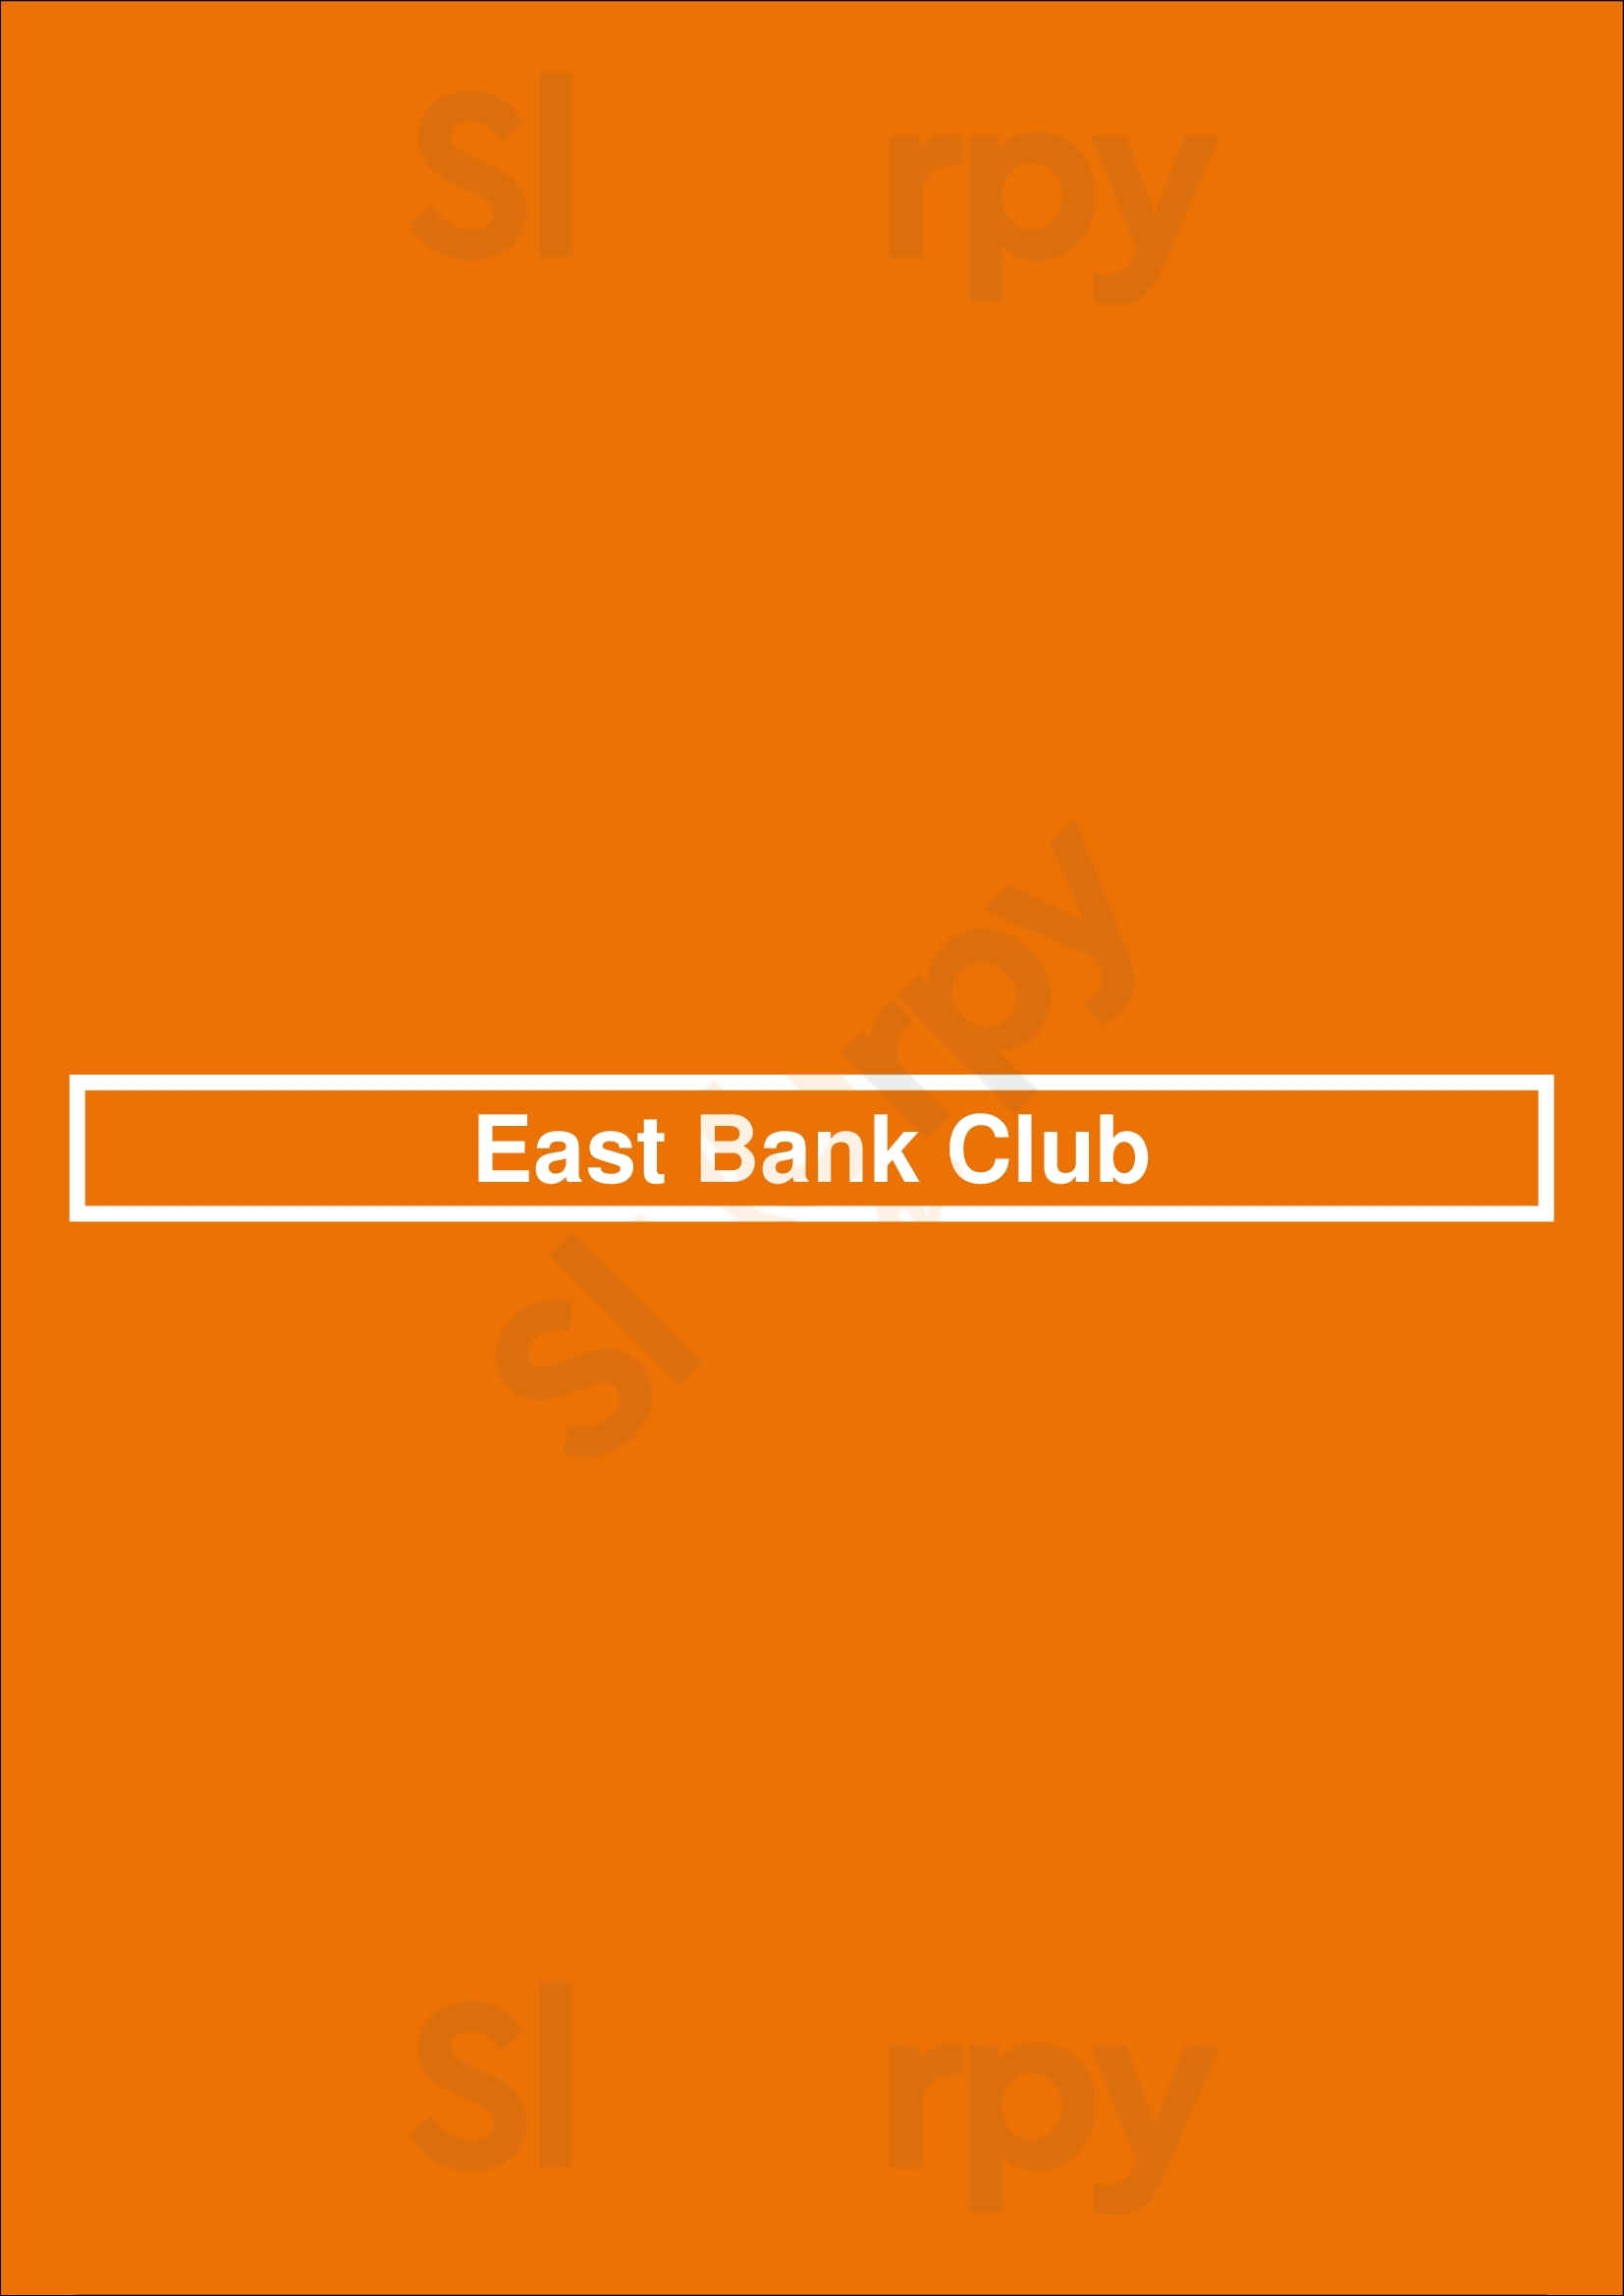 East Bank Club Chicago Menu - 1